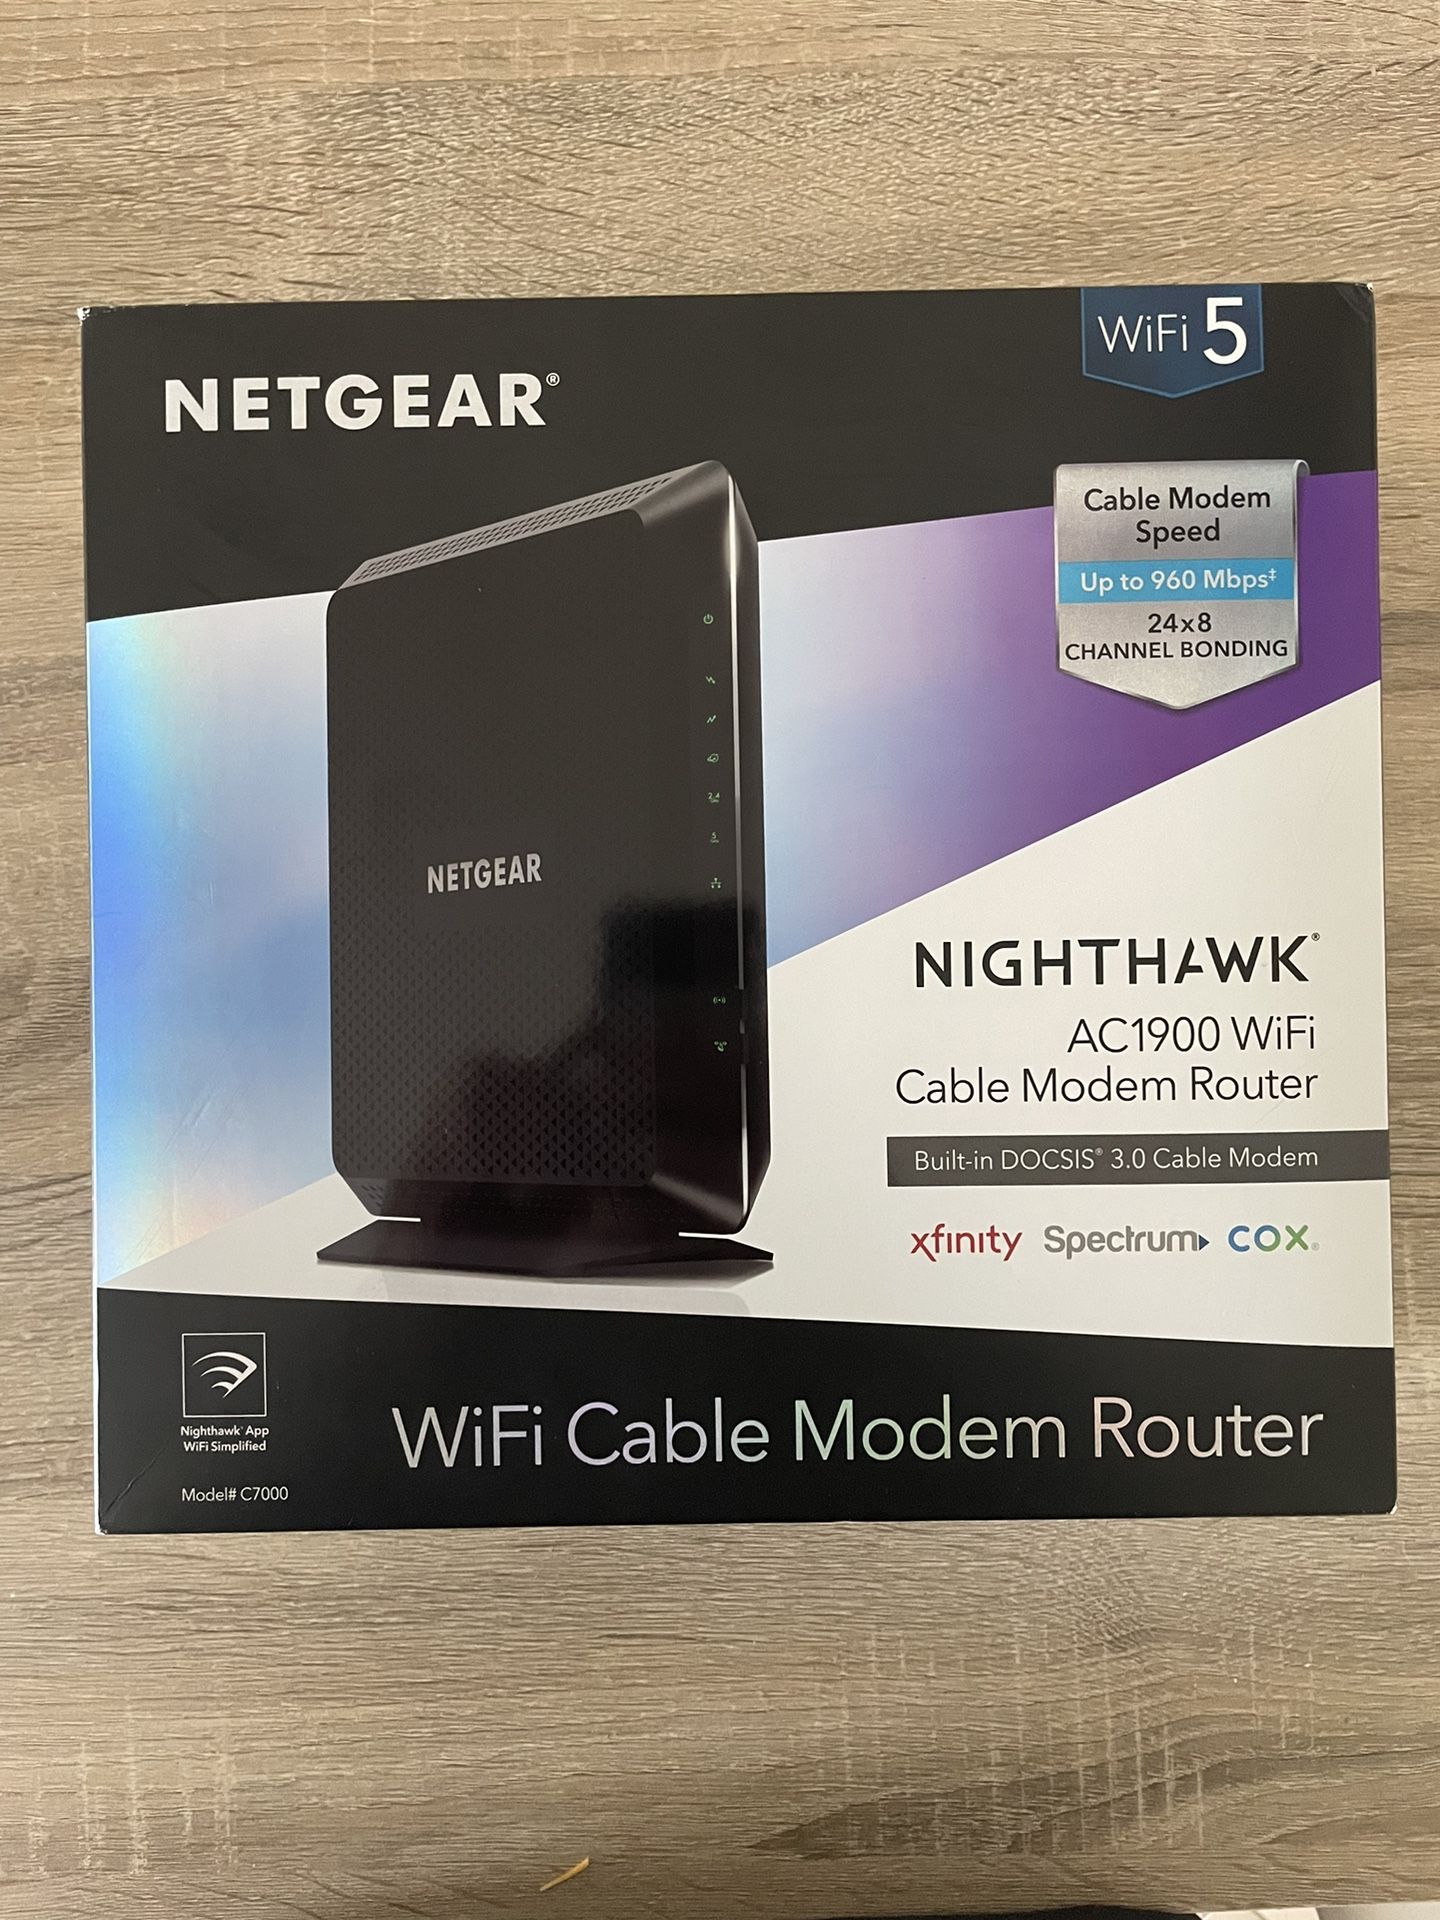 NETGEAR WiFi Cable Modem Router